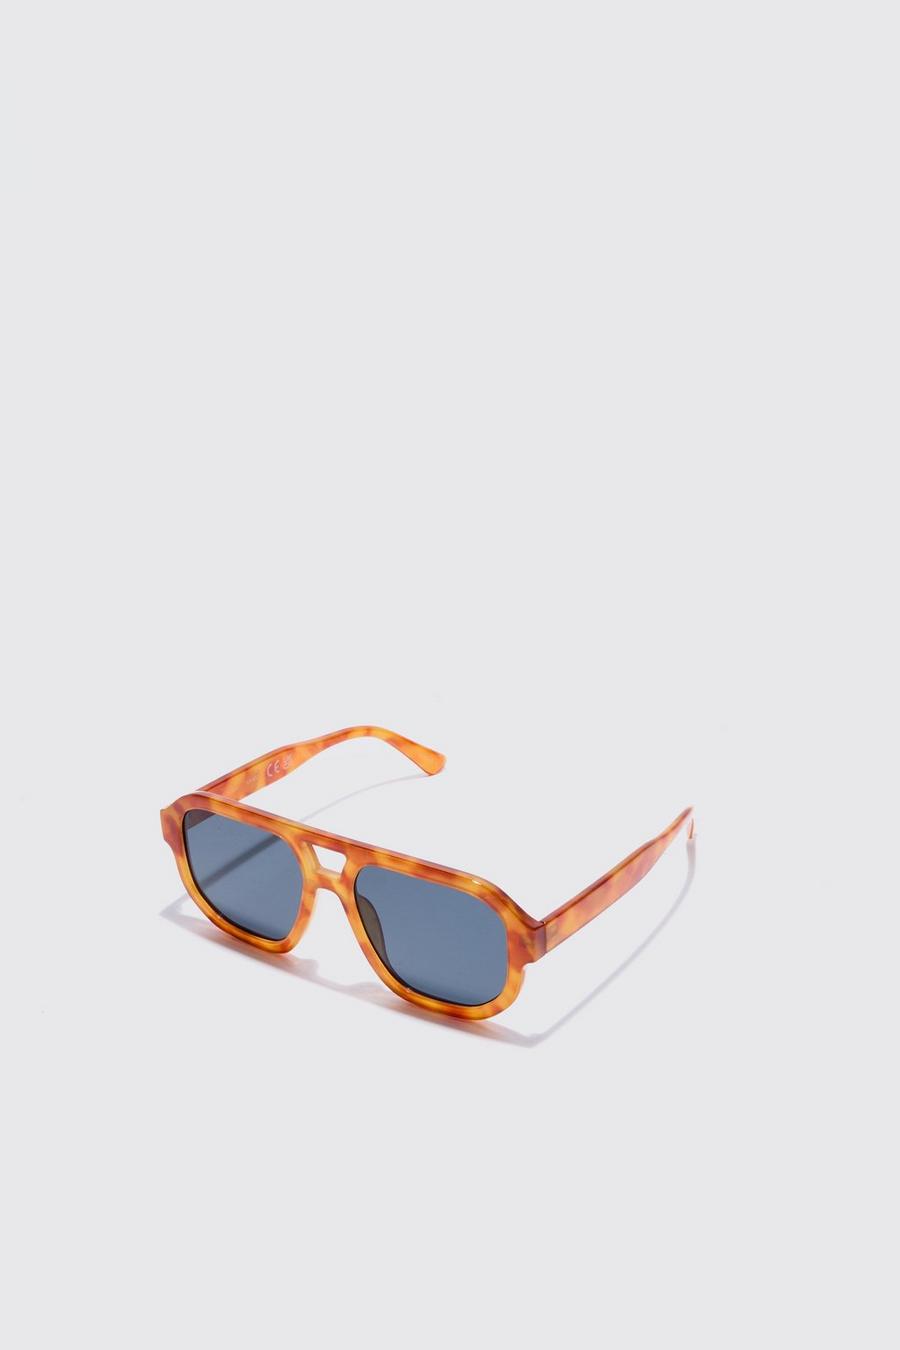 Black layered frame sunglasses